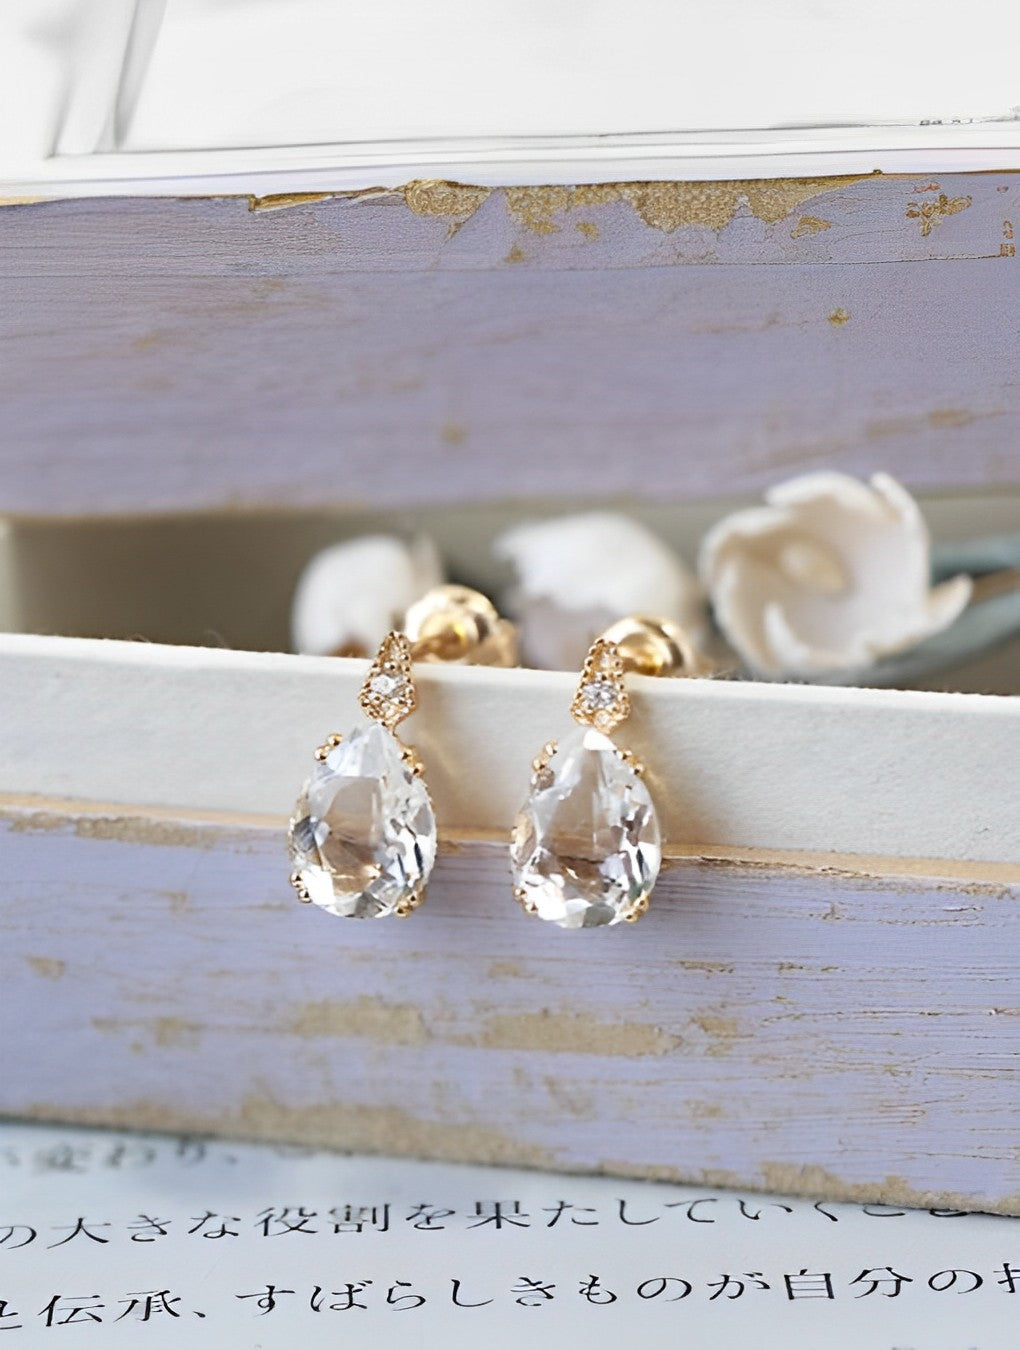 White Crystal Drop Earrings B1535